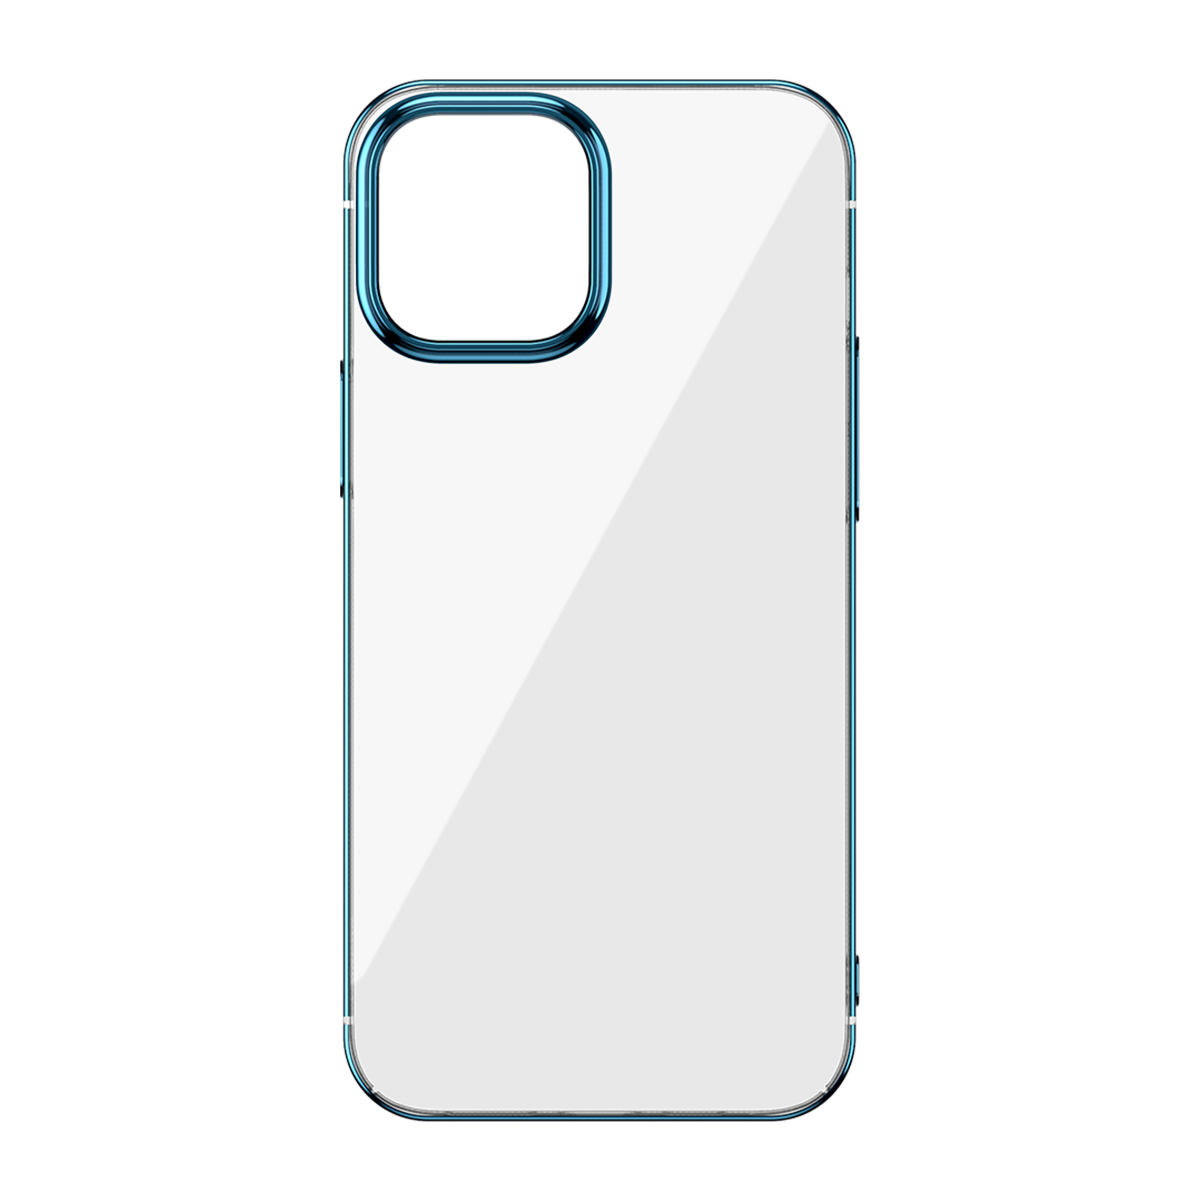 Husa Apple iPhone 12 Pro Max, Baseus Glitter, Transparent / Albastru, 6.7 inch imagine